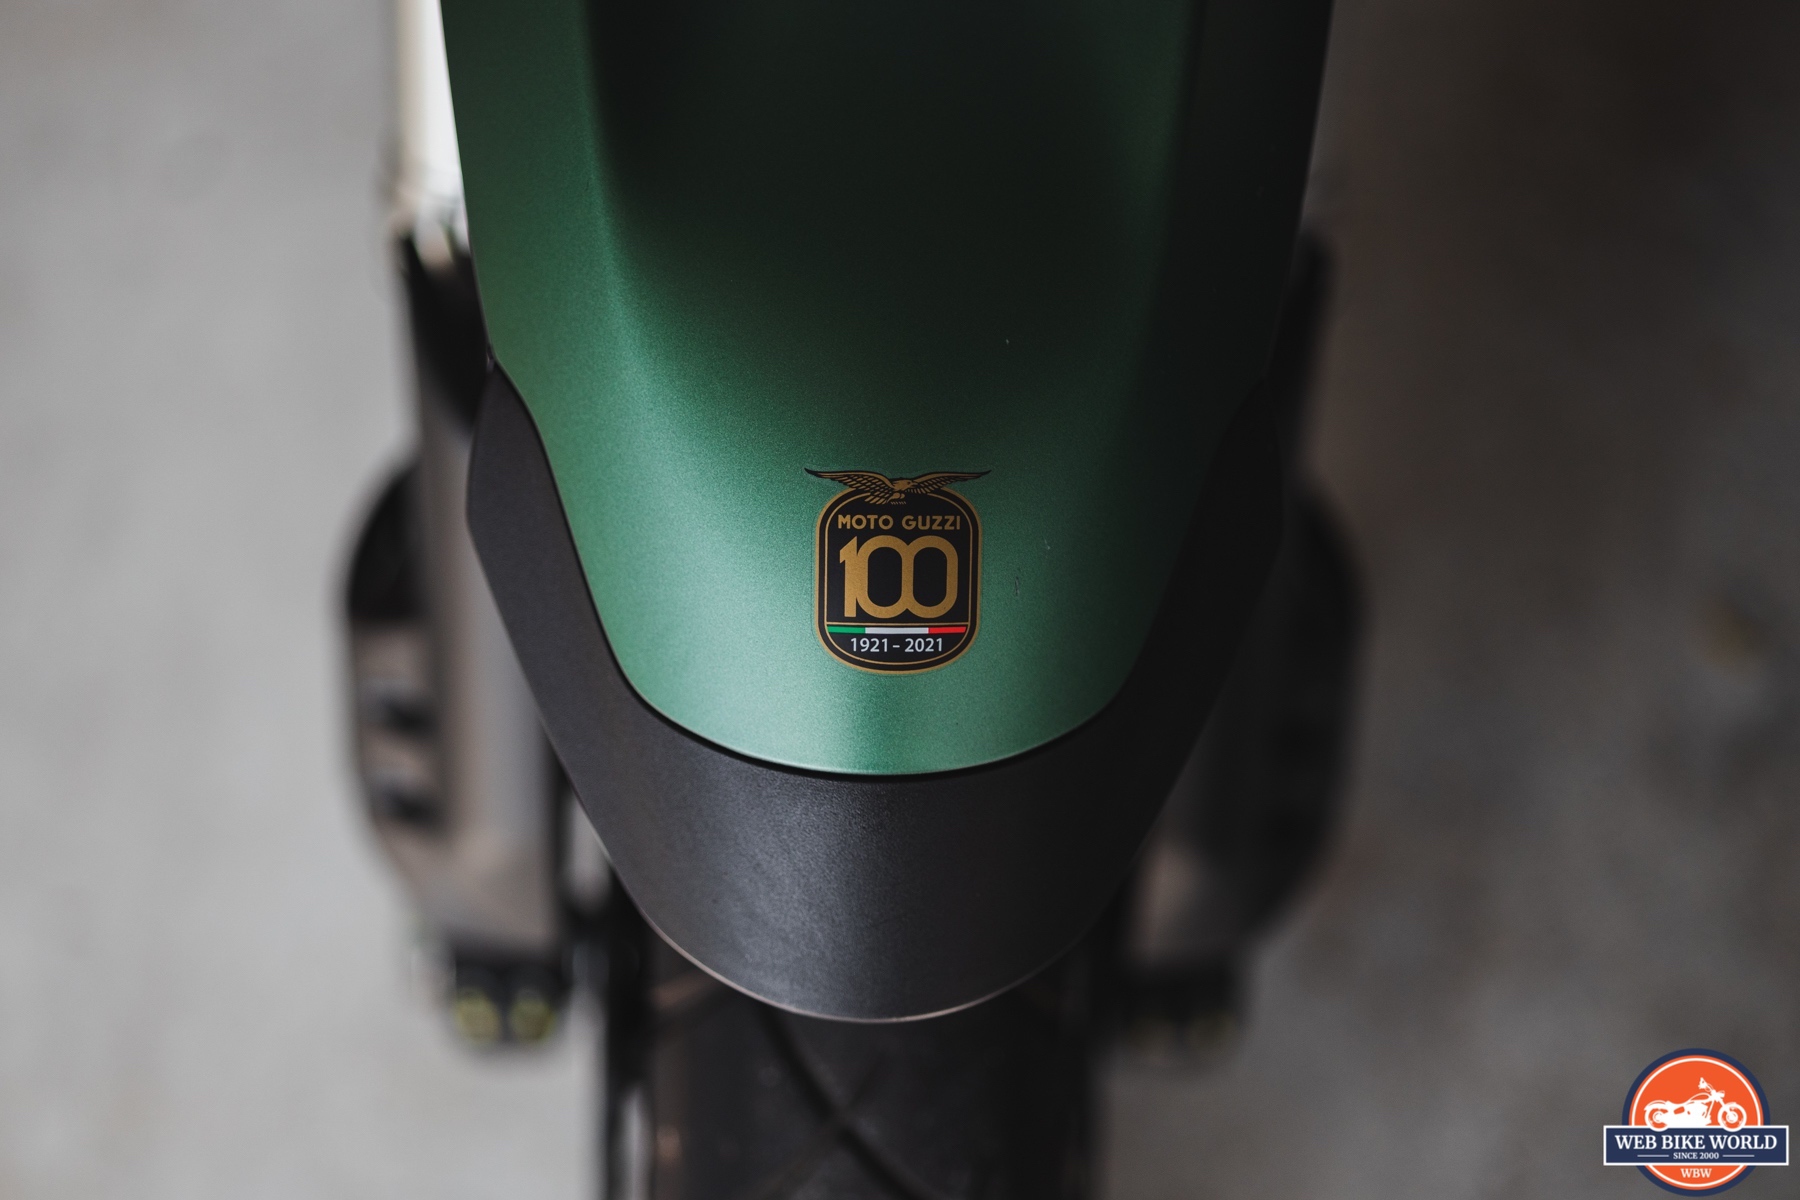 Detail photo of a 2021 Moto Guzzi V85TT Centenario front mud guard sticker